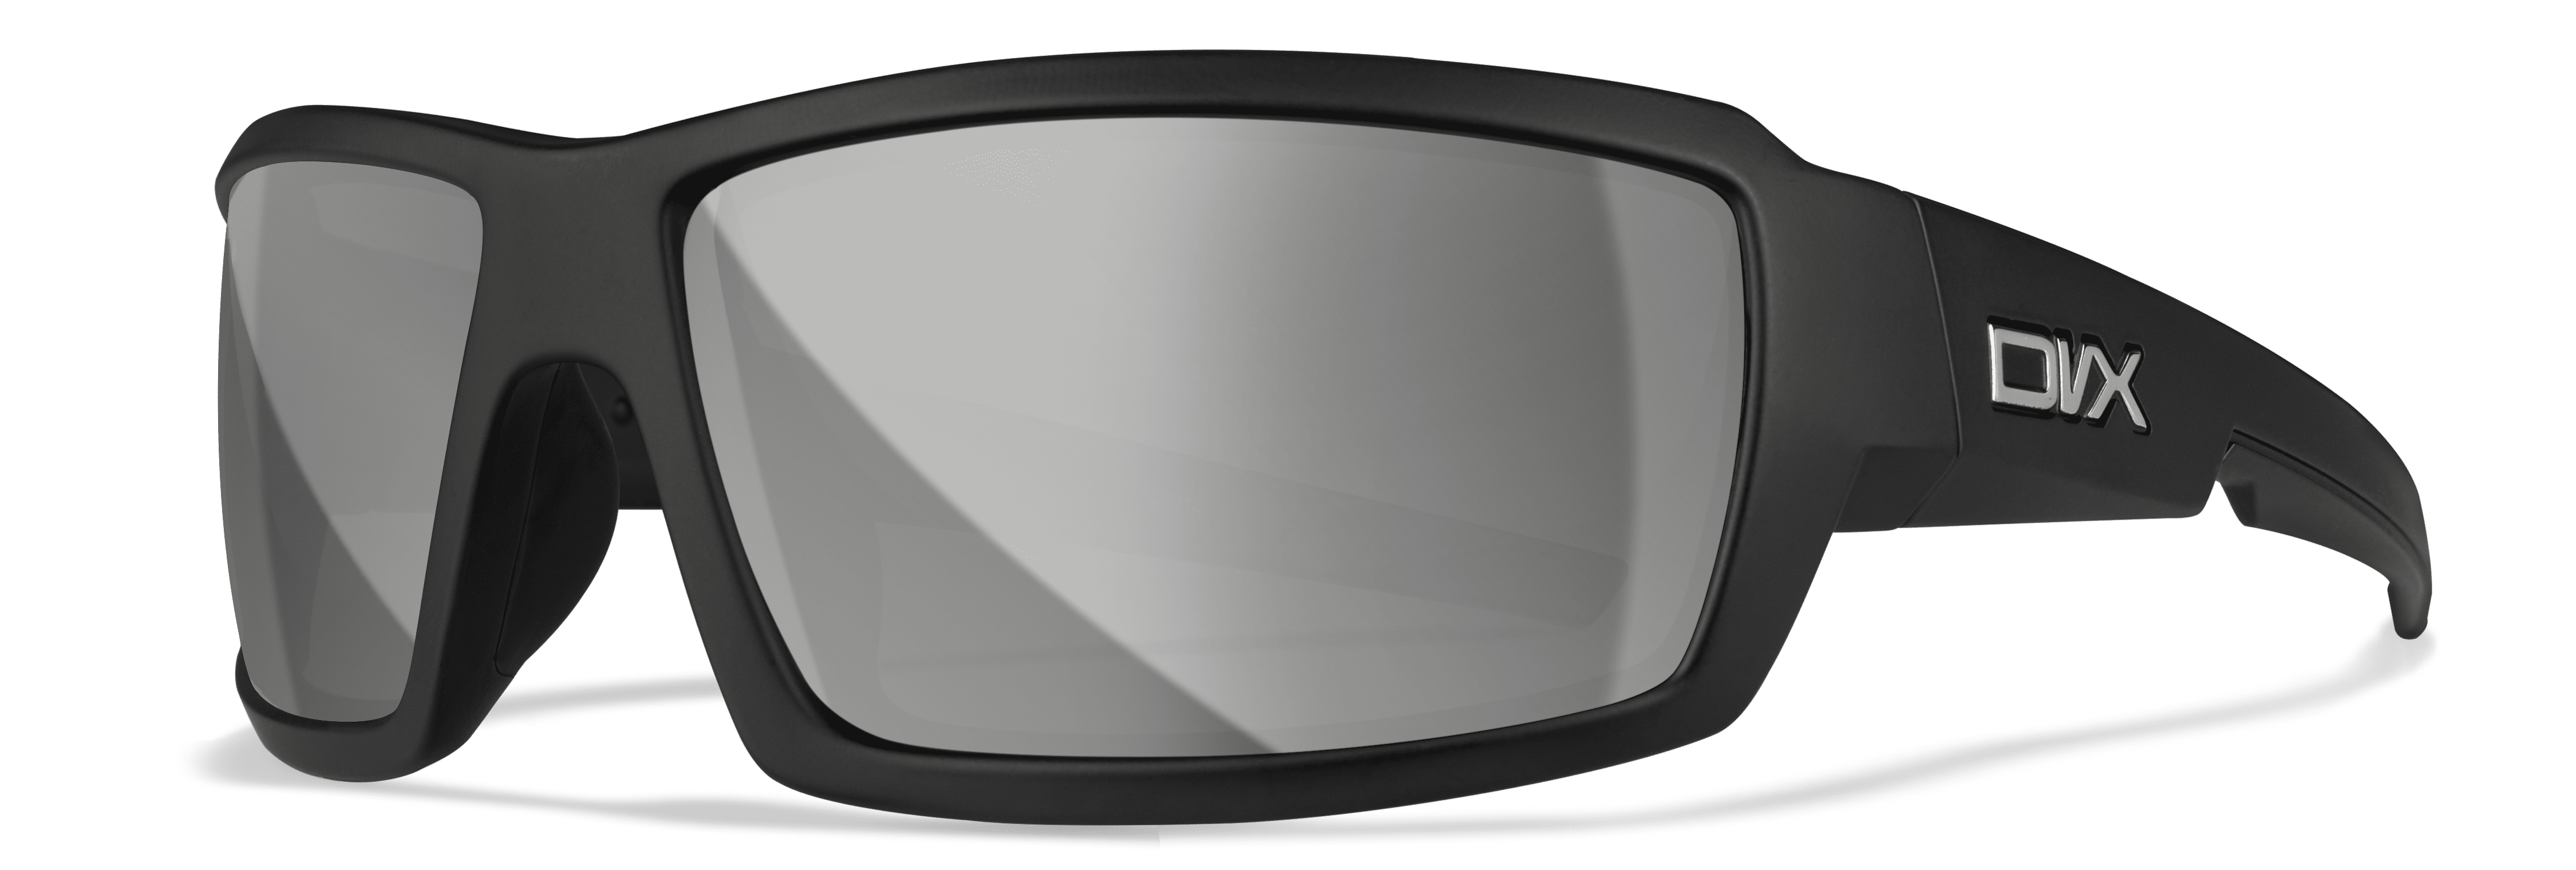 DVX by Wiley x - Detour- Sun & Safety Glasses- Polarized Grey Lenses/ Matte Black Frame